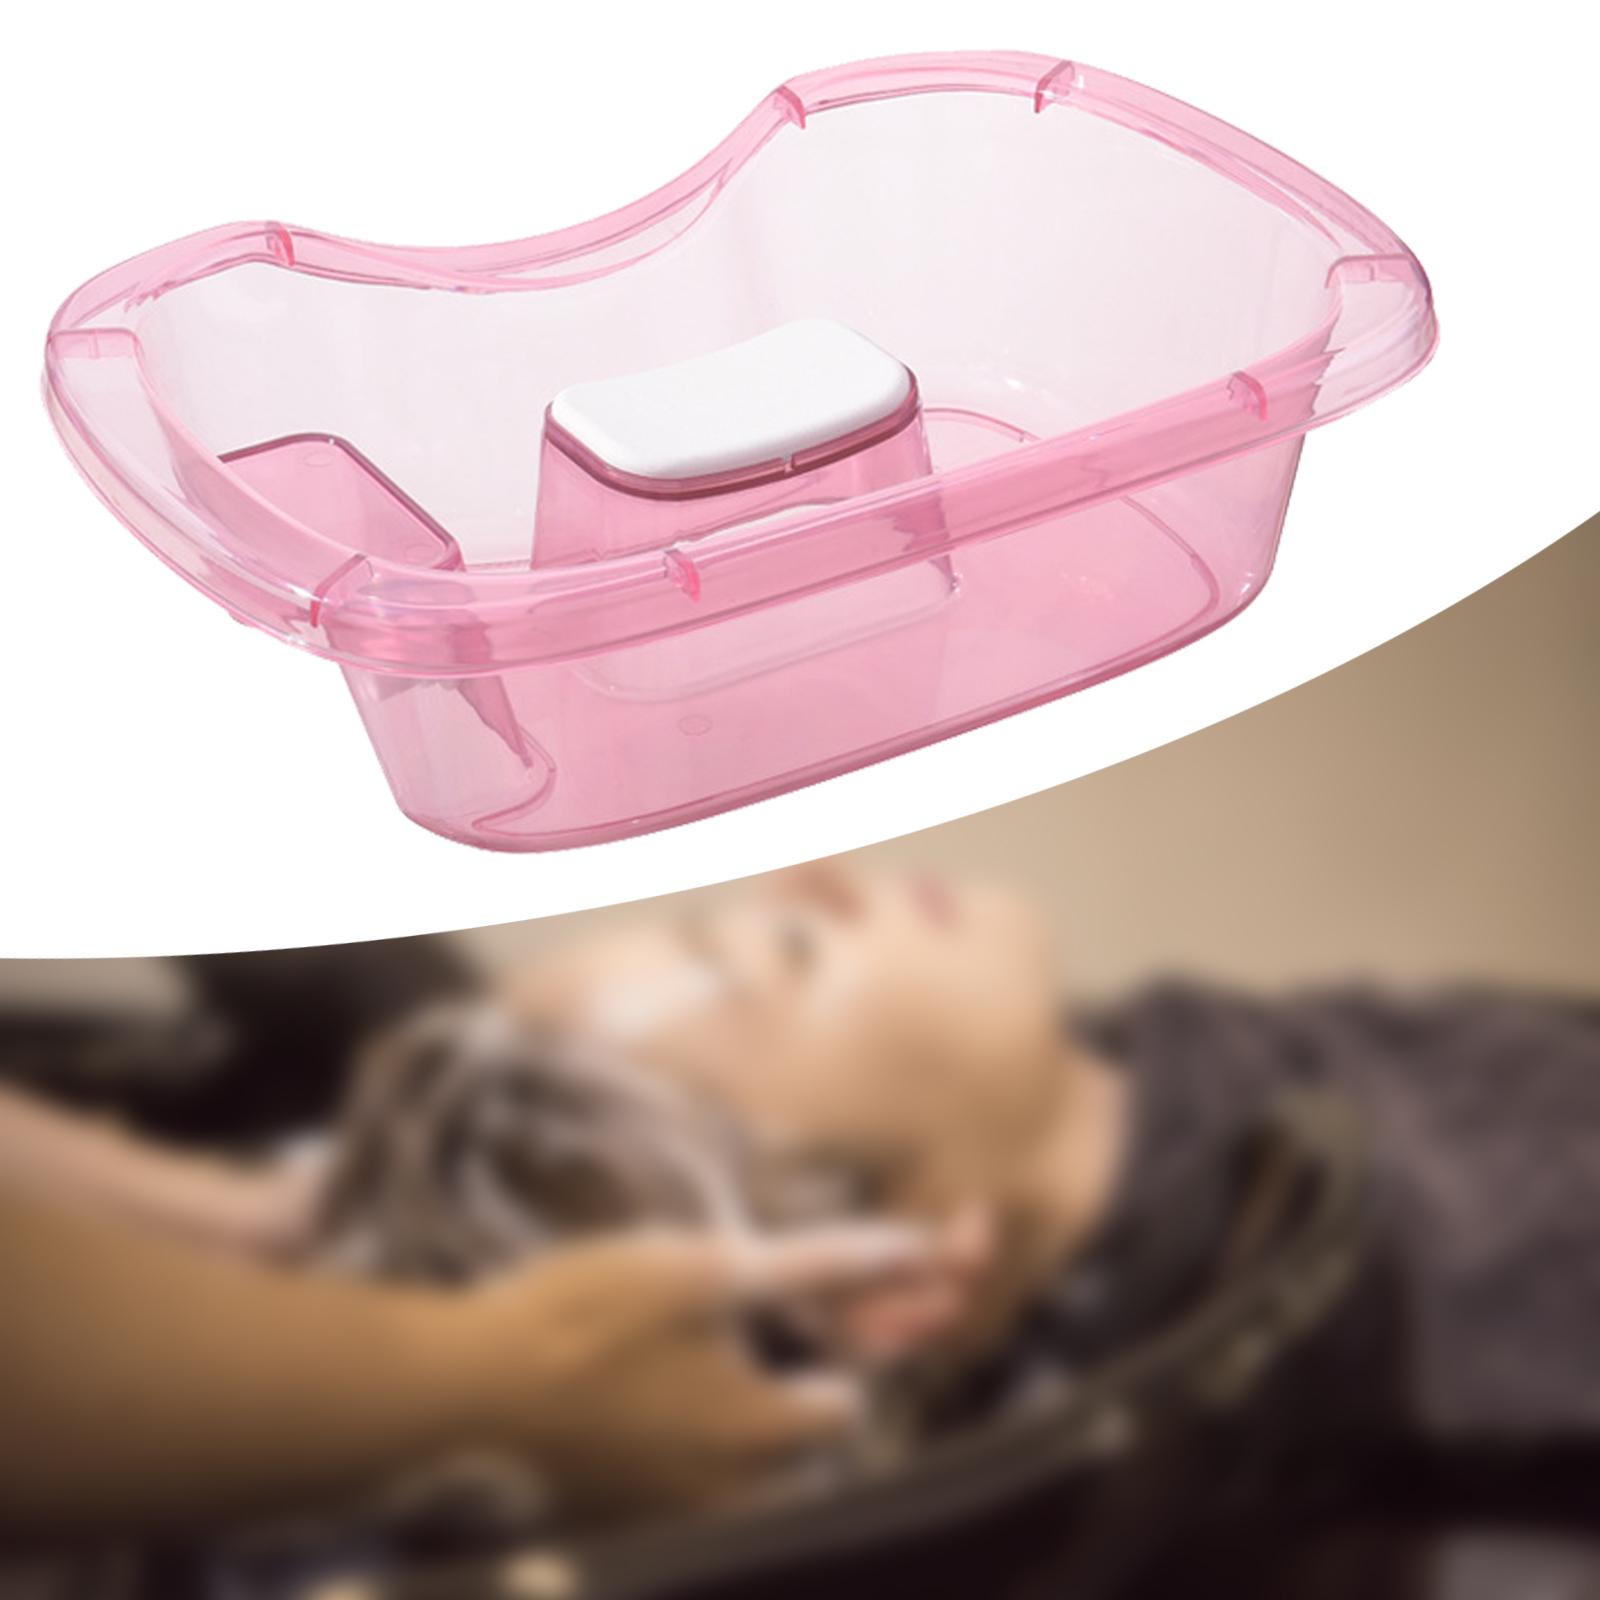 Shampoo Basin Lightweight Rinse Basin Shampoo Bowl for Home Bedside Disabled Pink